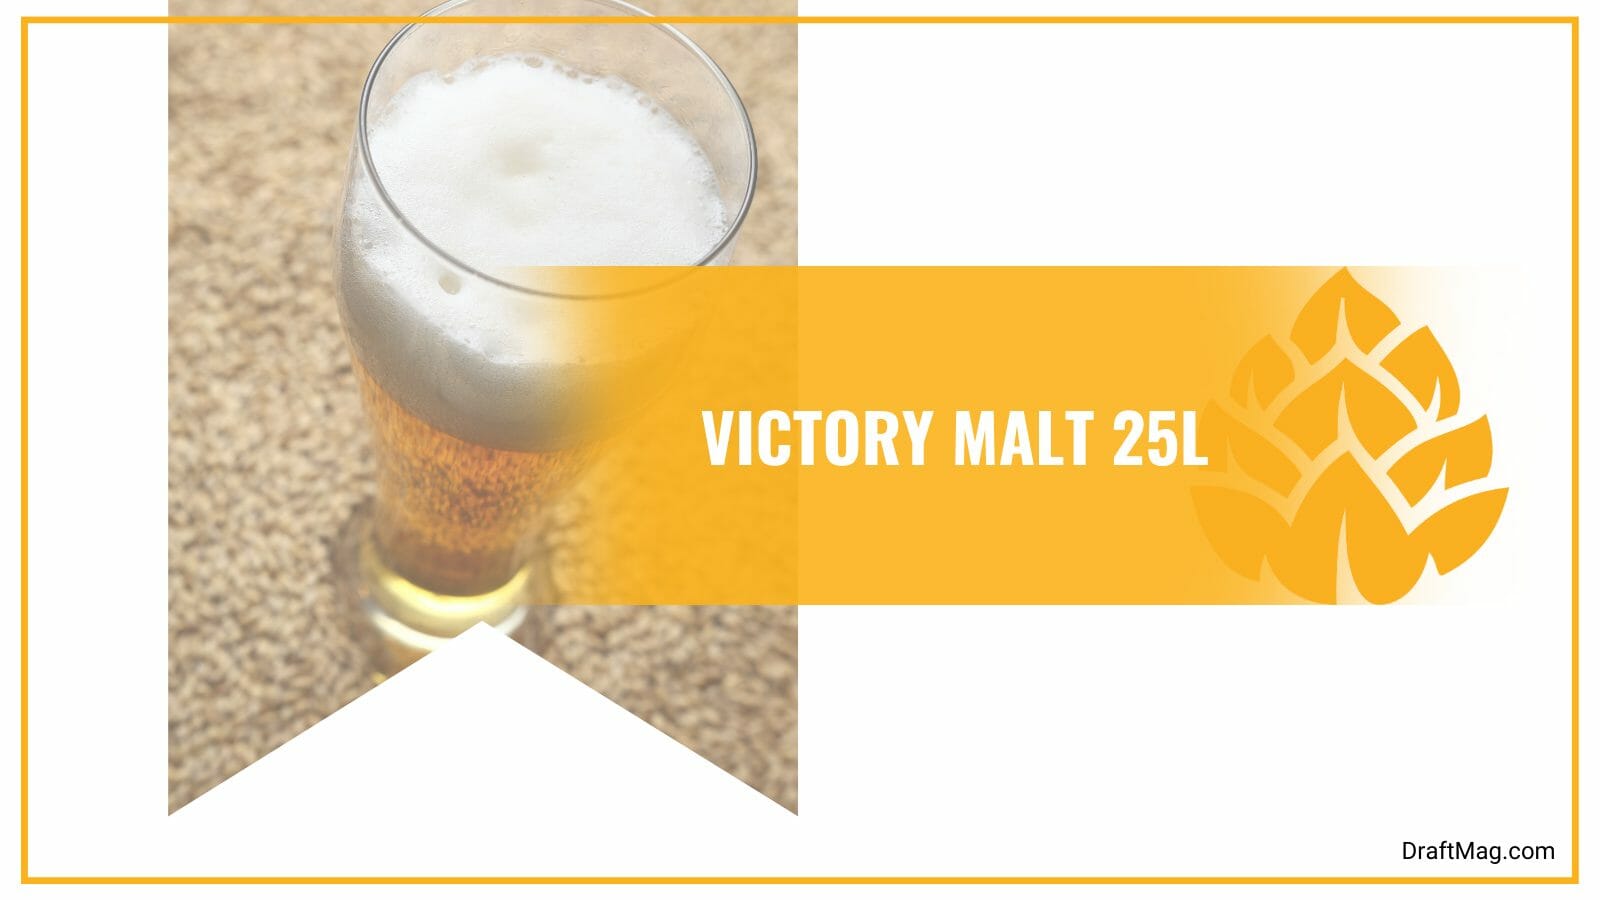 Victory malt